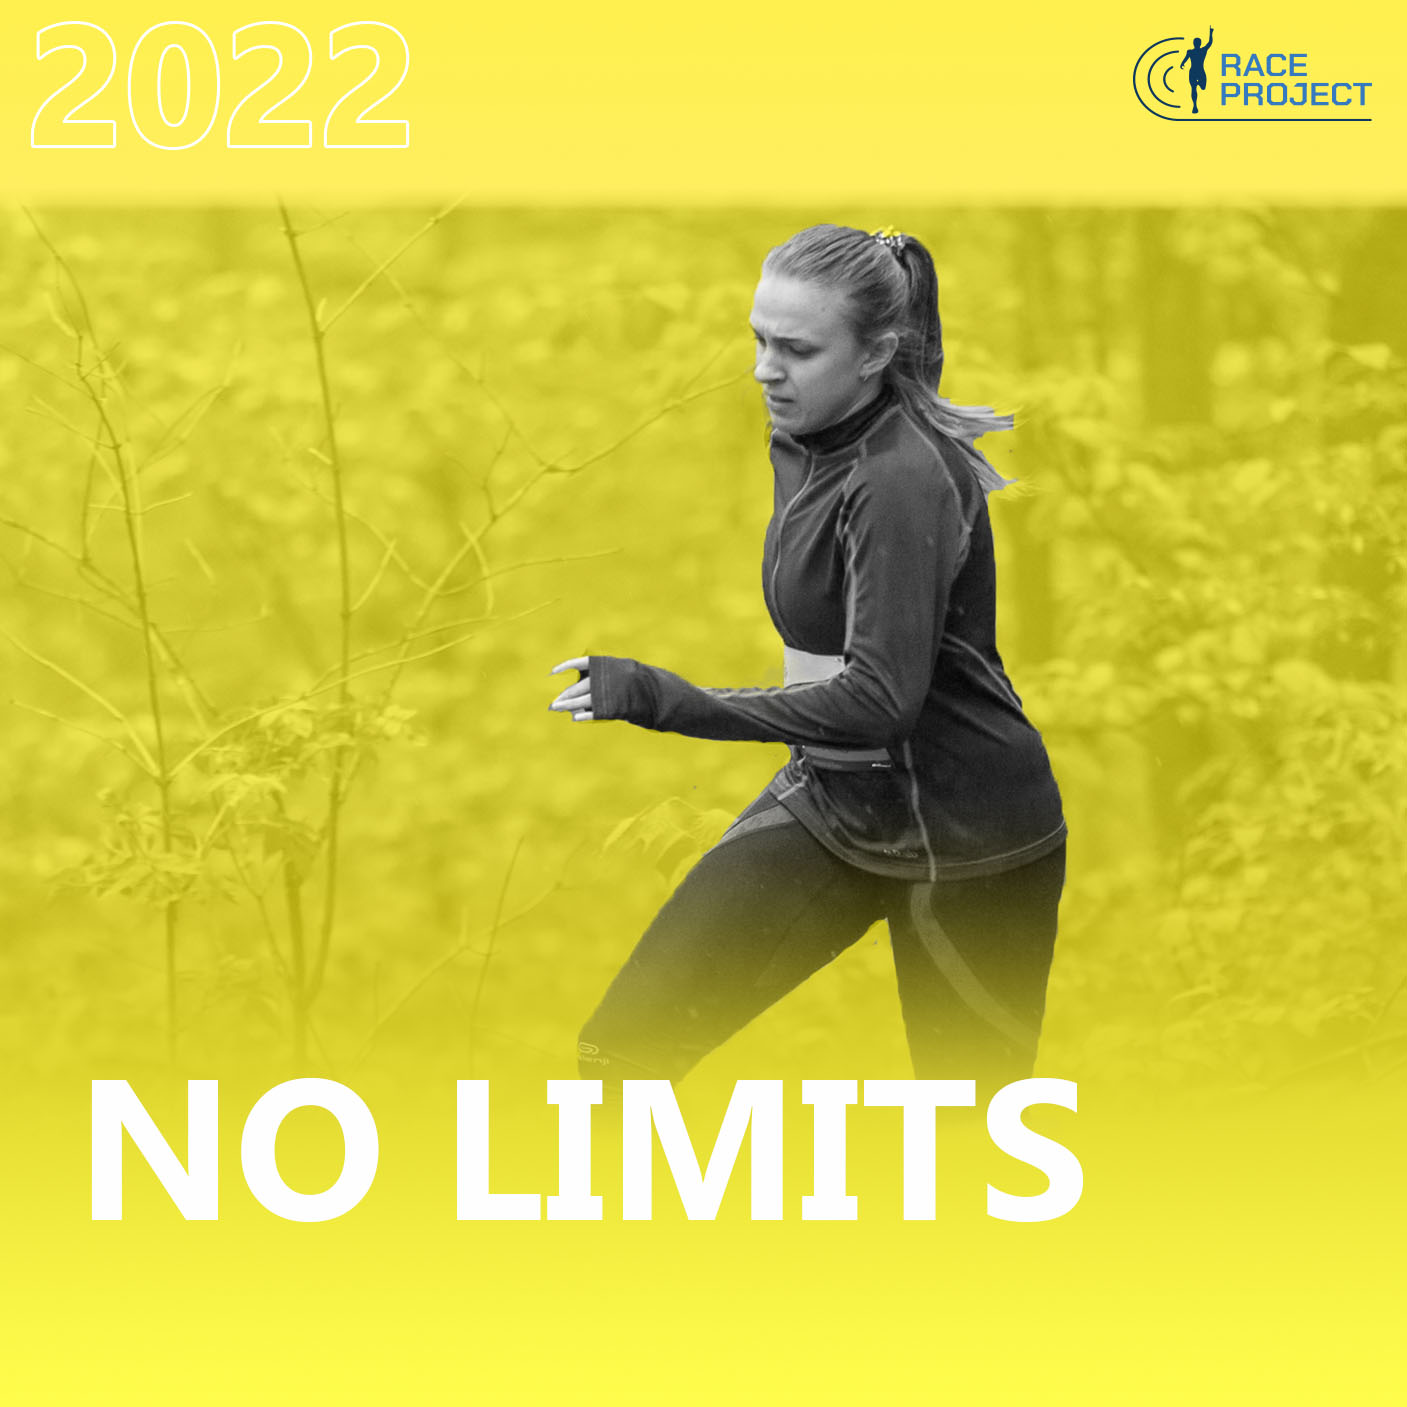 No limits 2022|trail